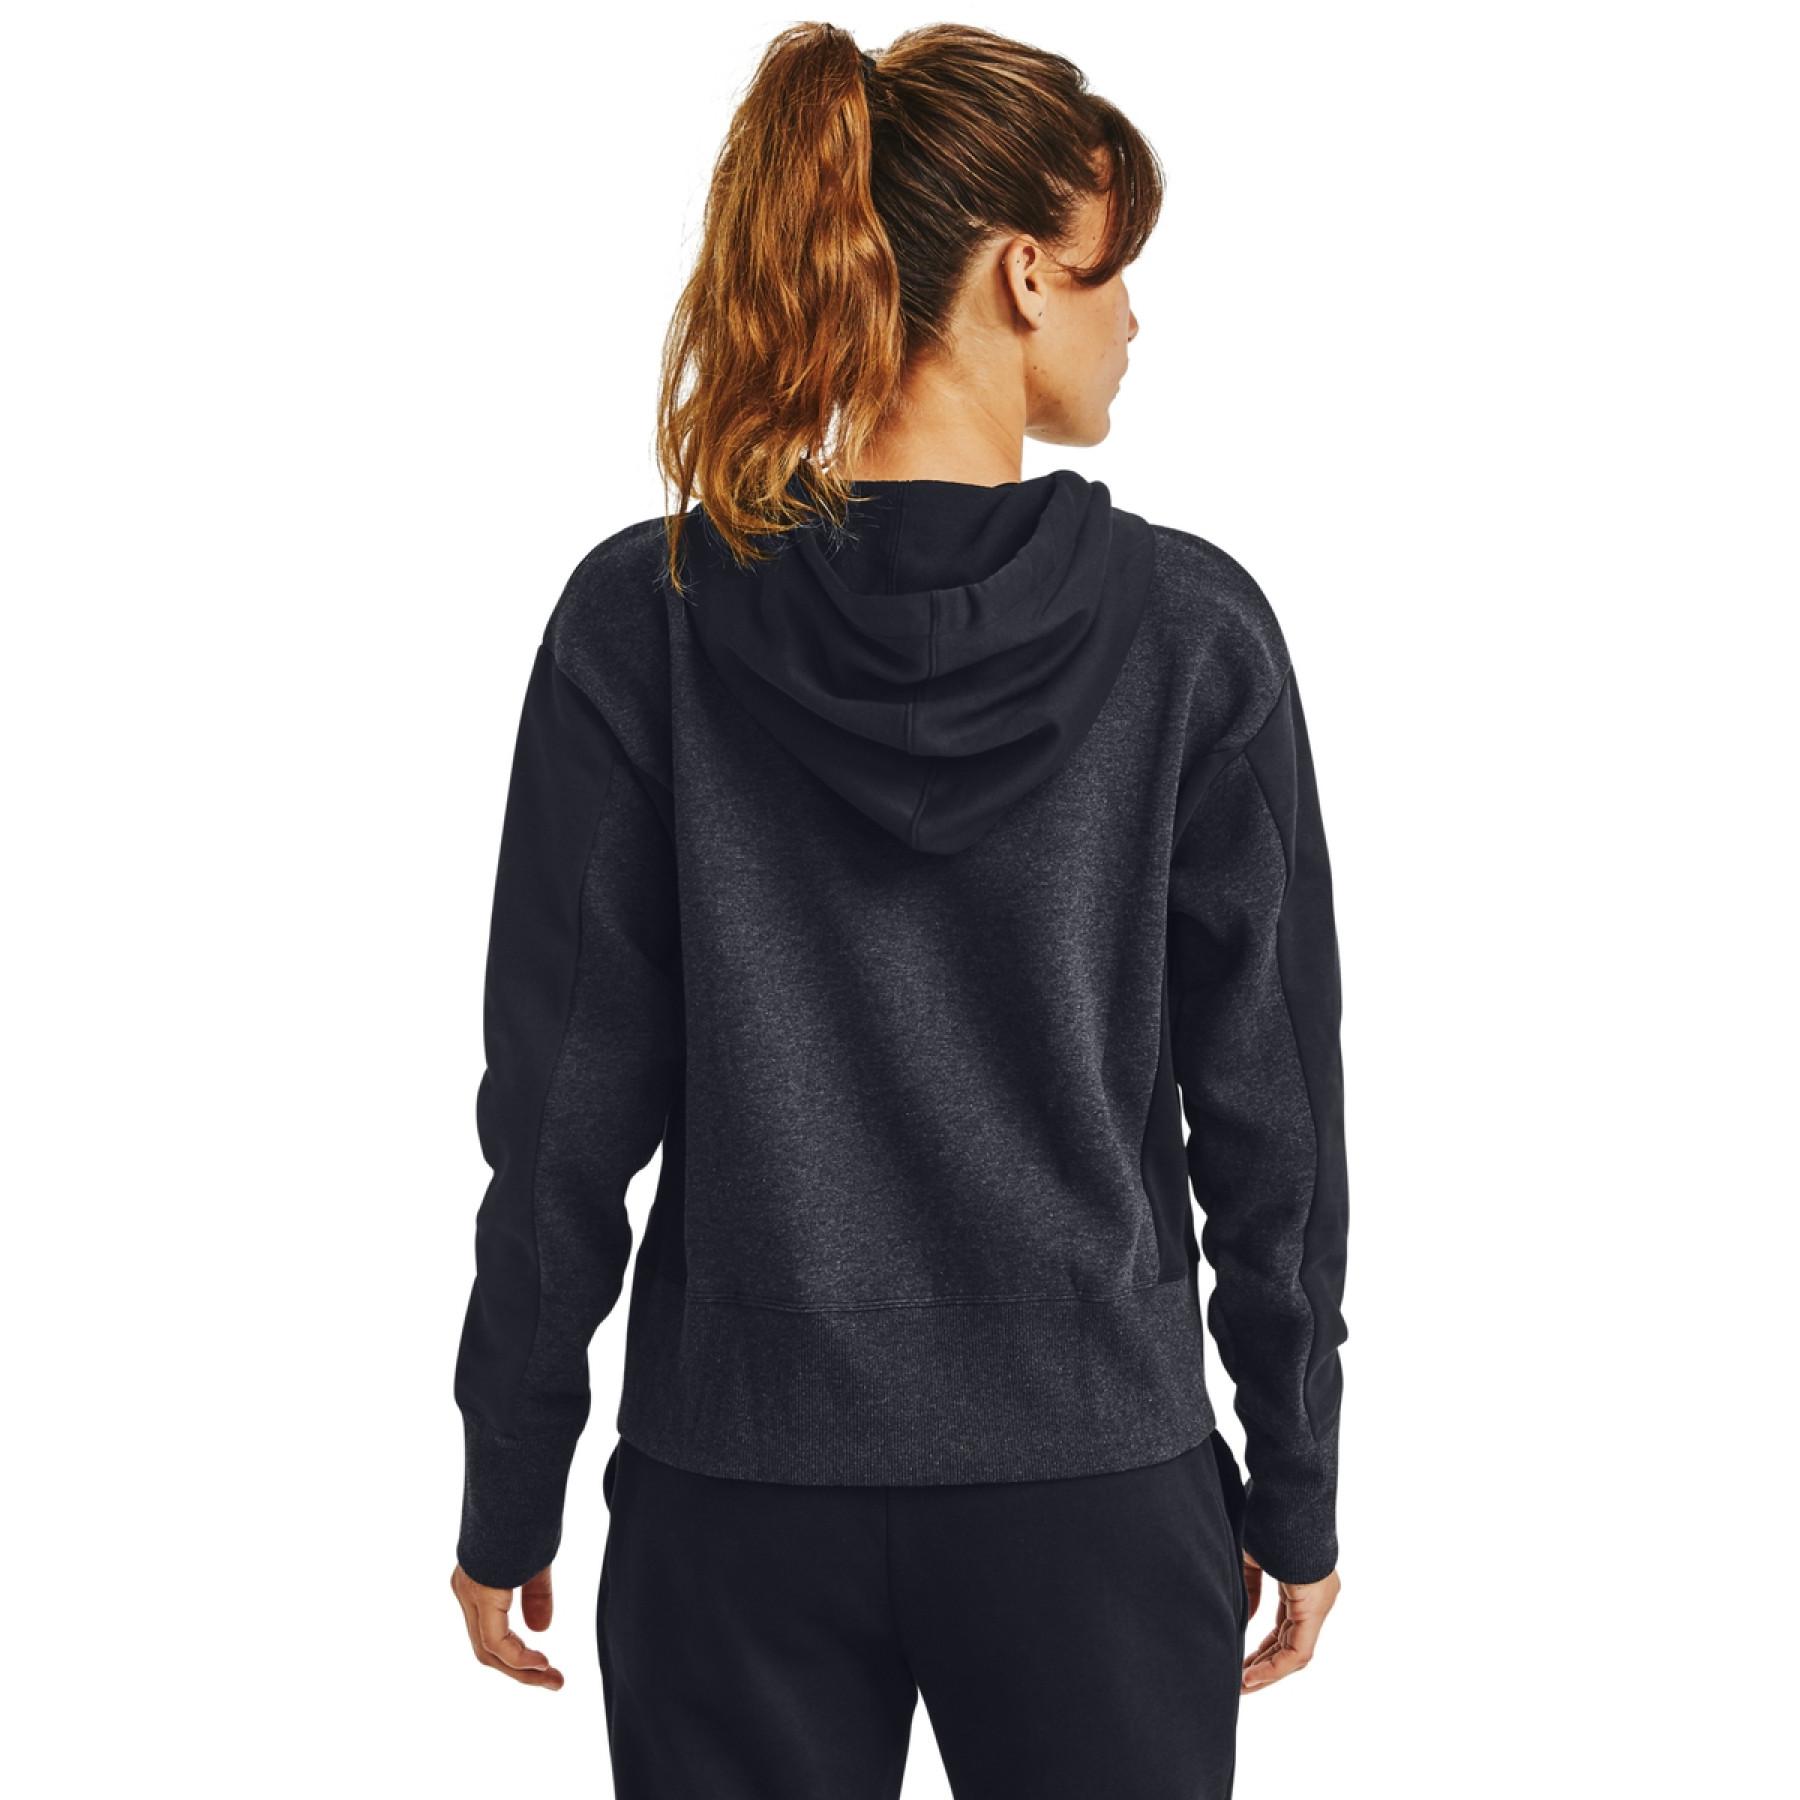 Women's hoodie Under Armour Rival Fleece Embroidered Full Zip